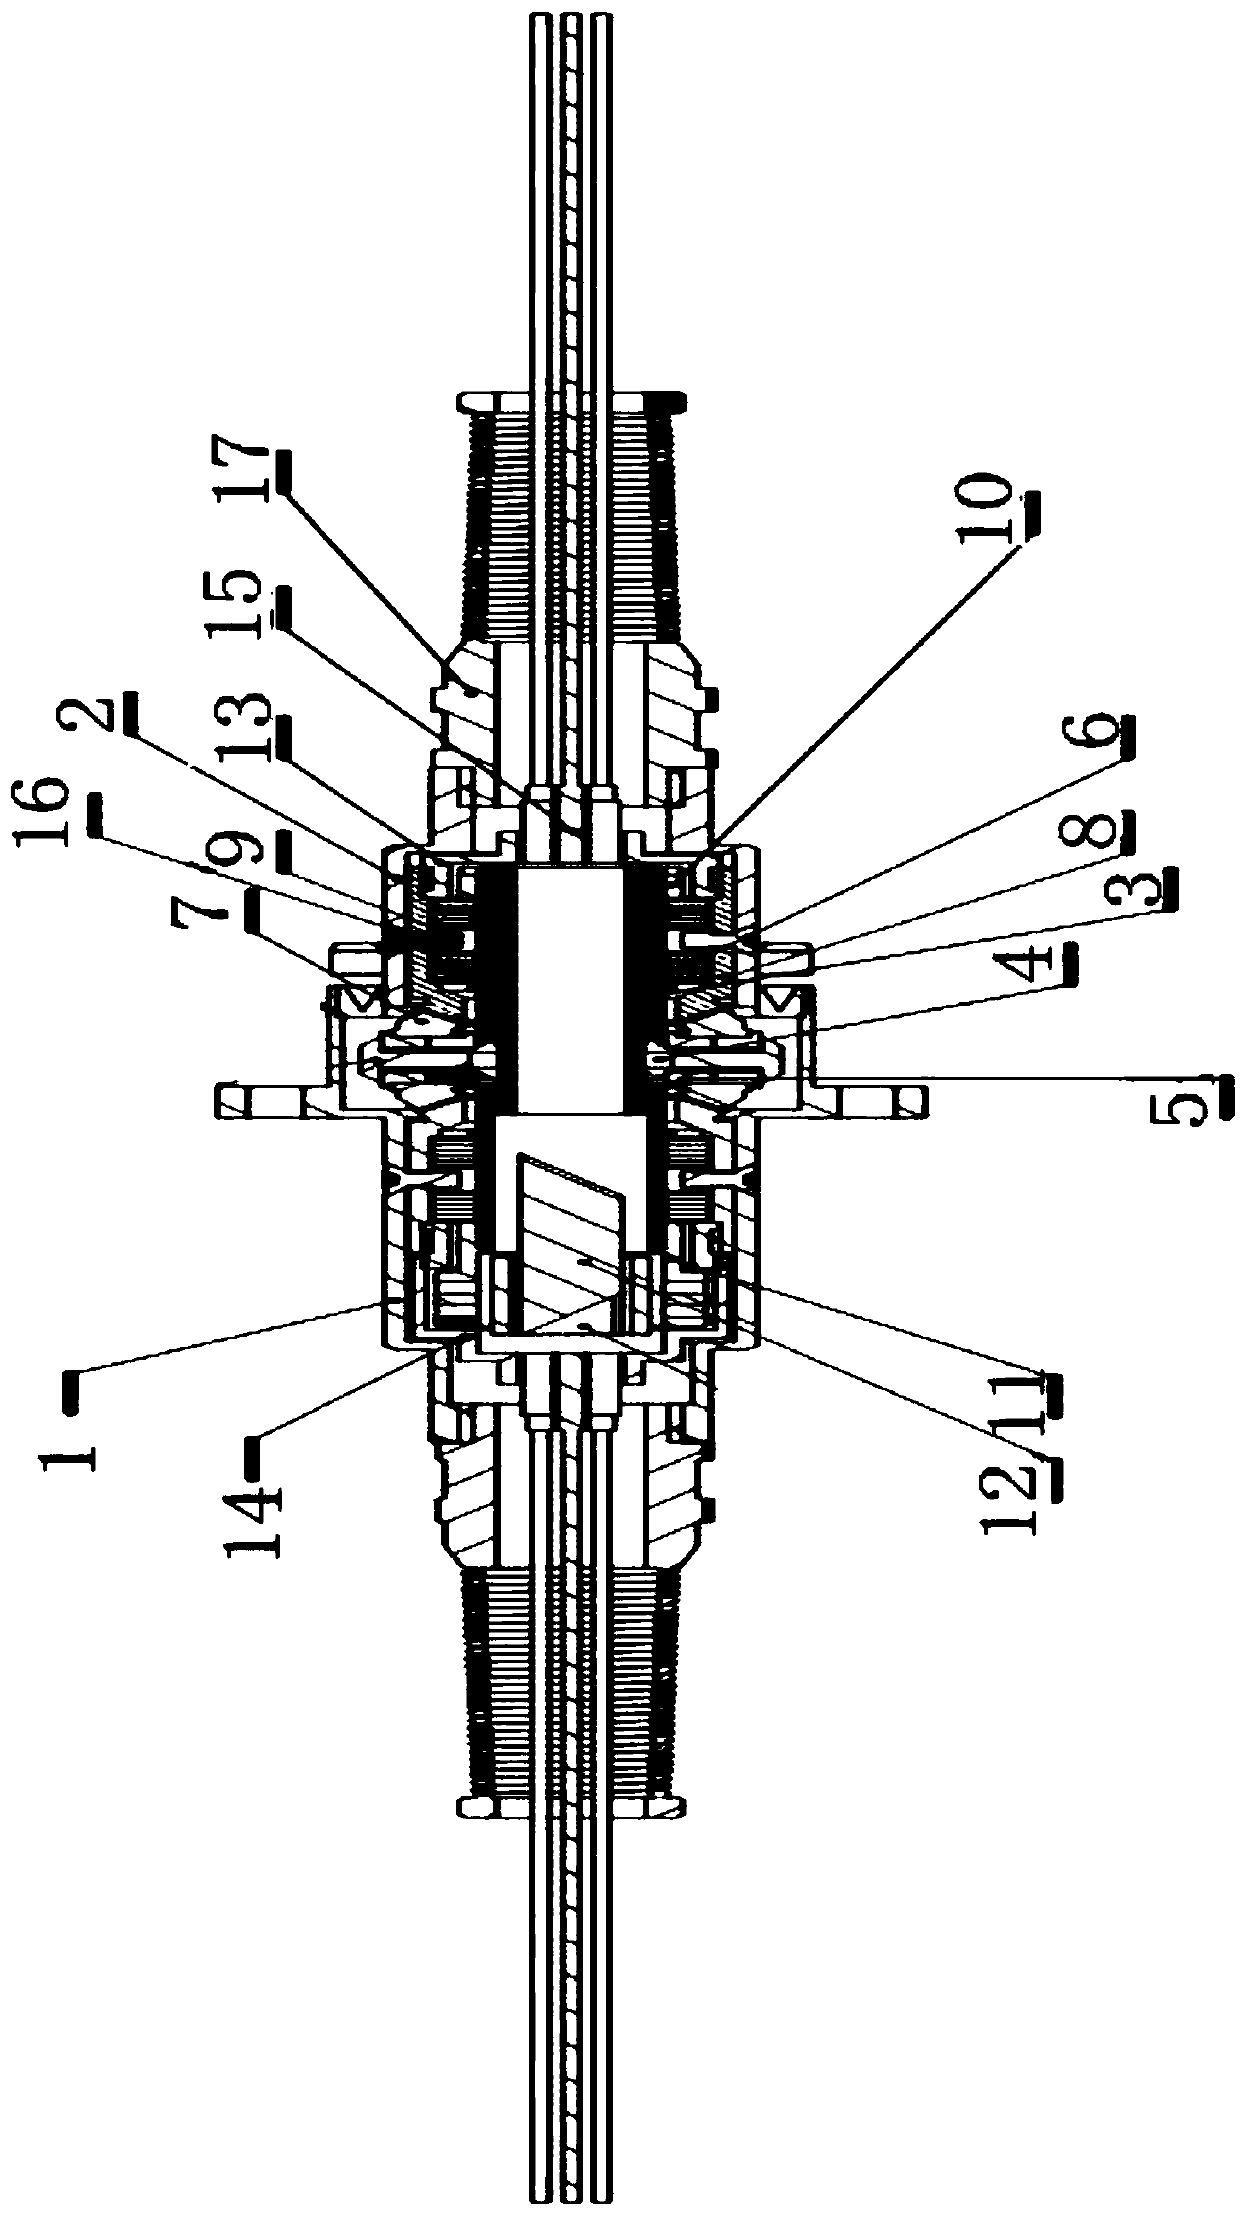 Optical fiber rotary connector